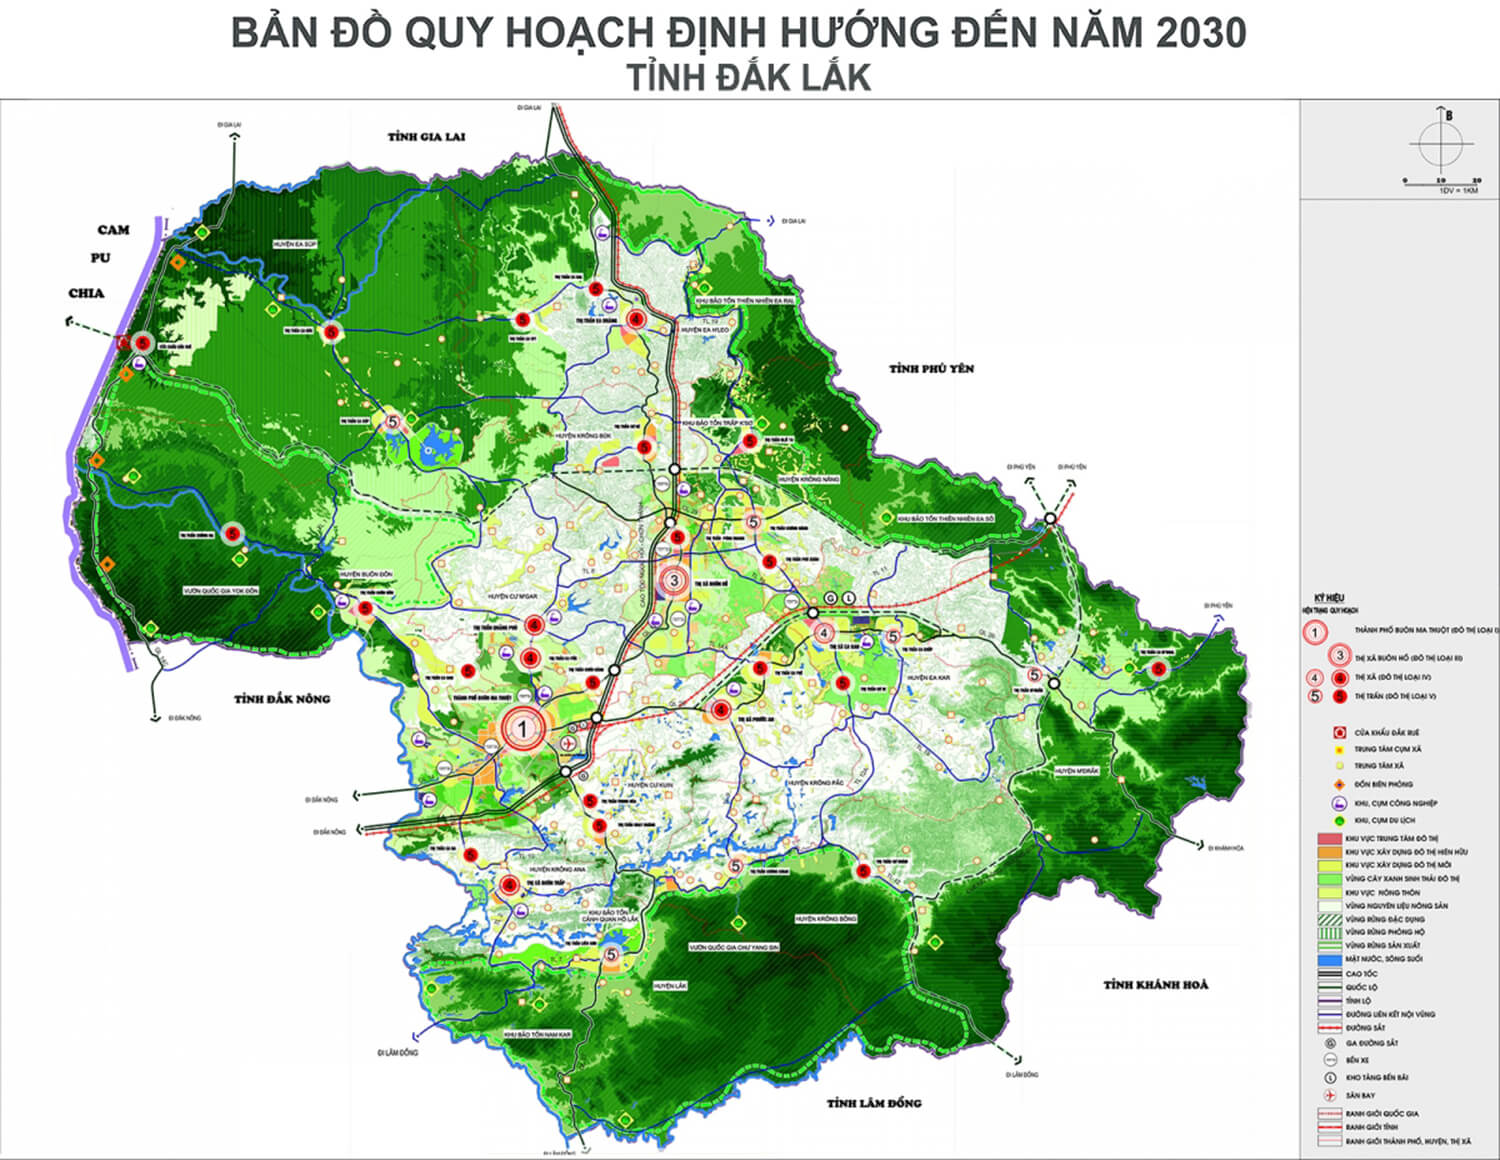 ban-do-quy-hoach-huyen-buon-don-tinh-dak-lak-den-nam-2030